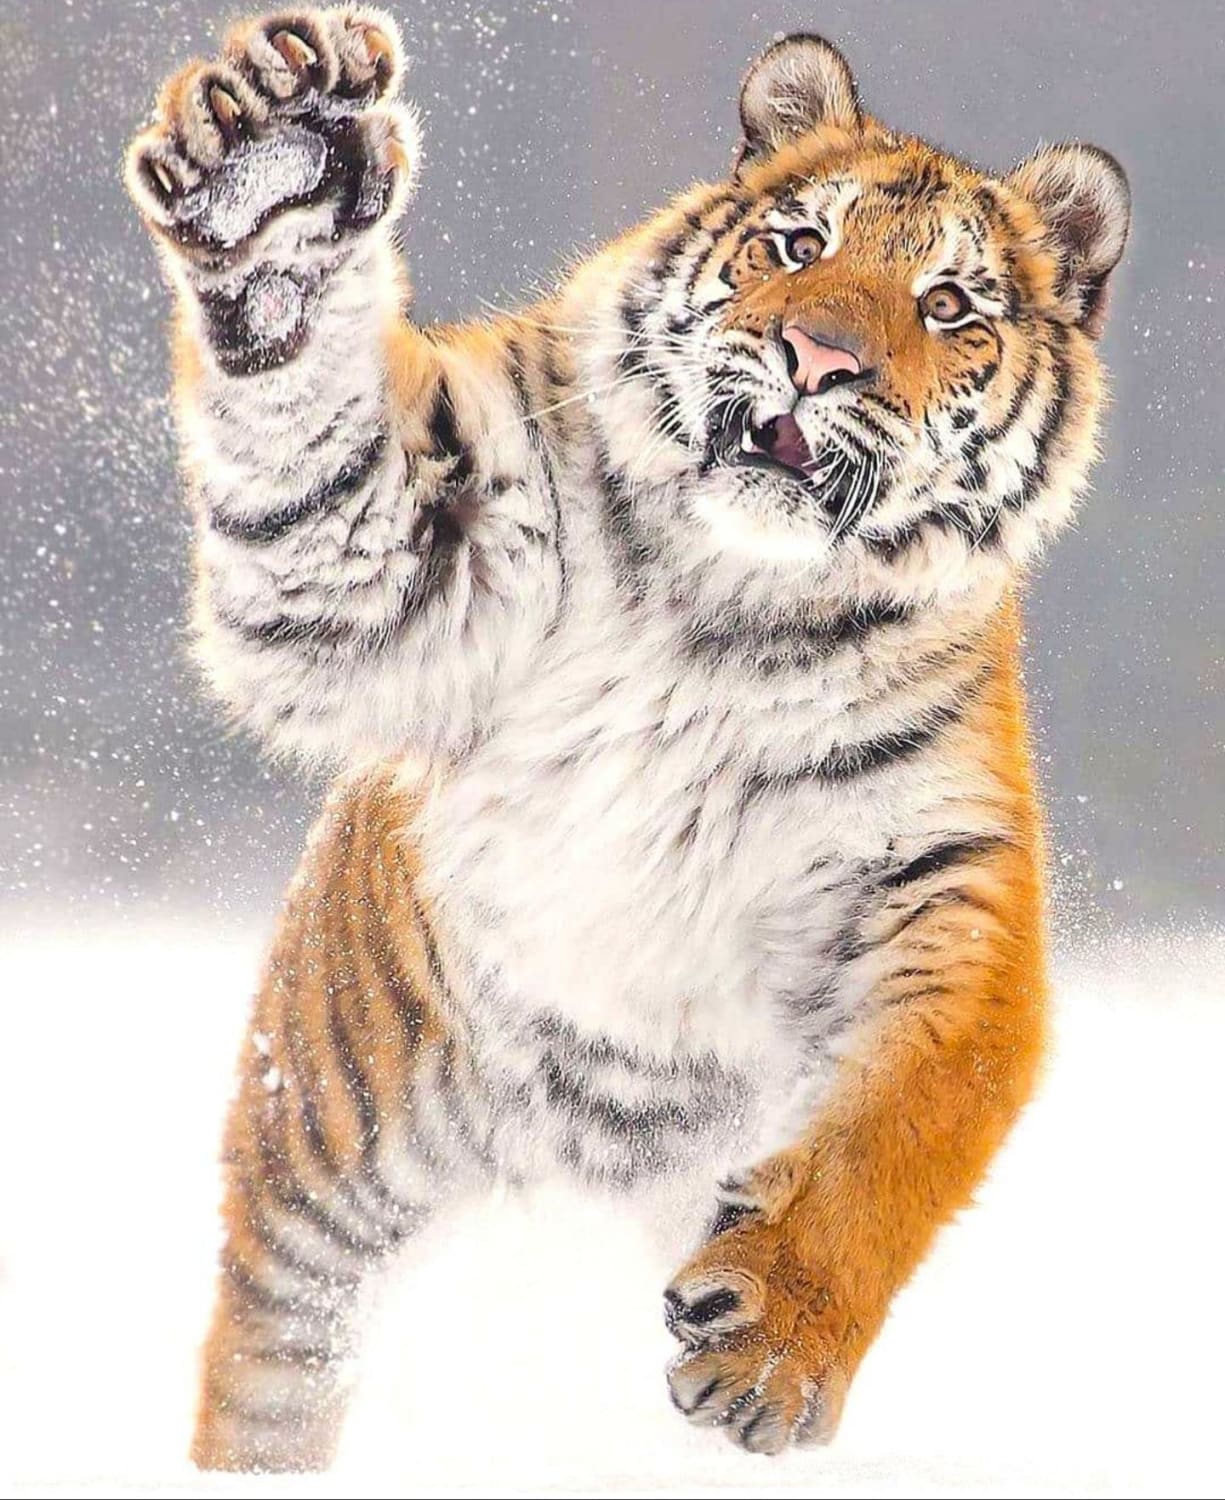 Siberian tiger enjoying some snow (x-post from r/pics)